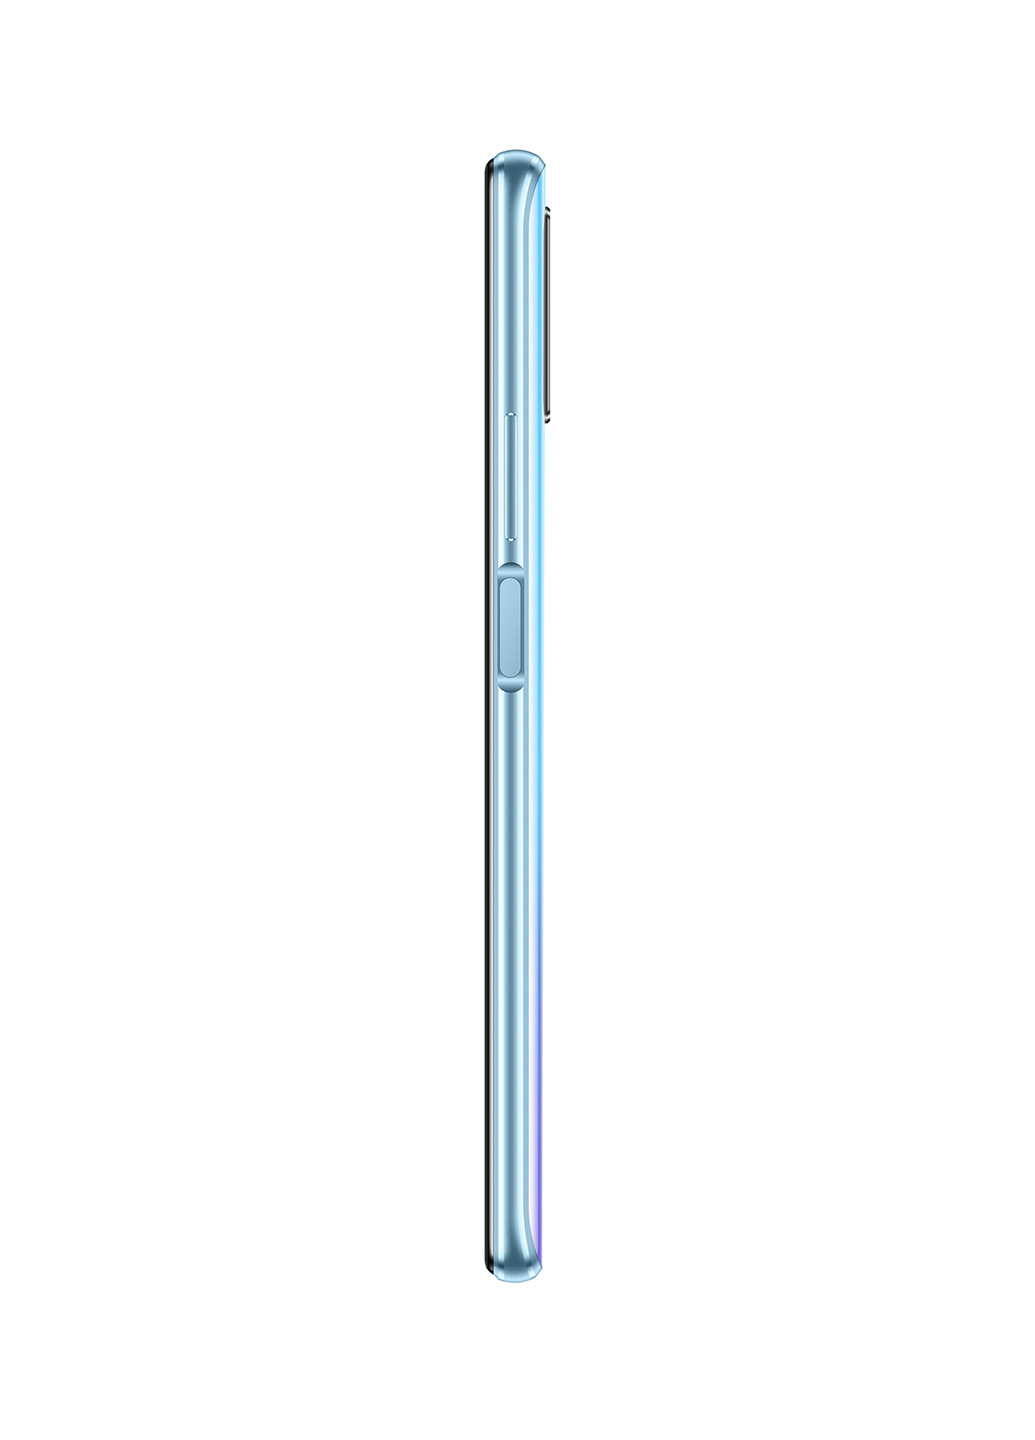 Смартфон Huawei p smart pro 6gb/128gb breathing crystal (163174120)